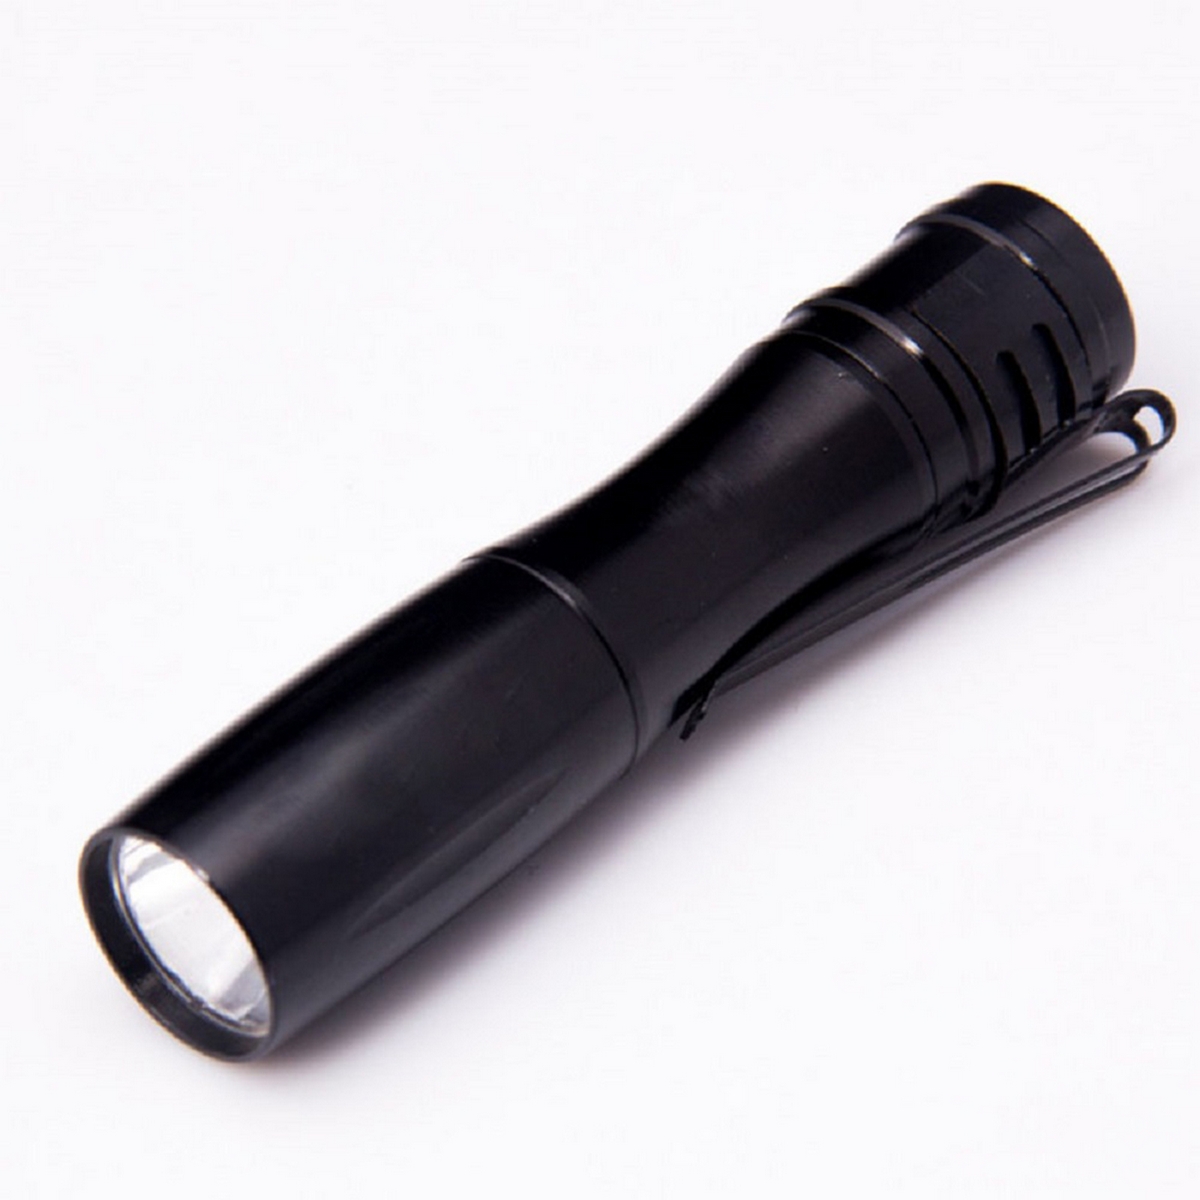 LED Aluminum Pen Light with Pocket Clip